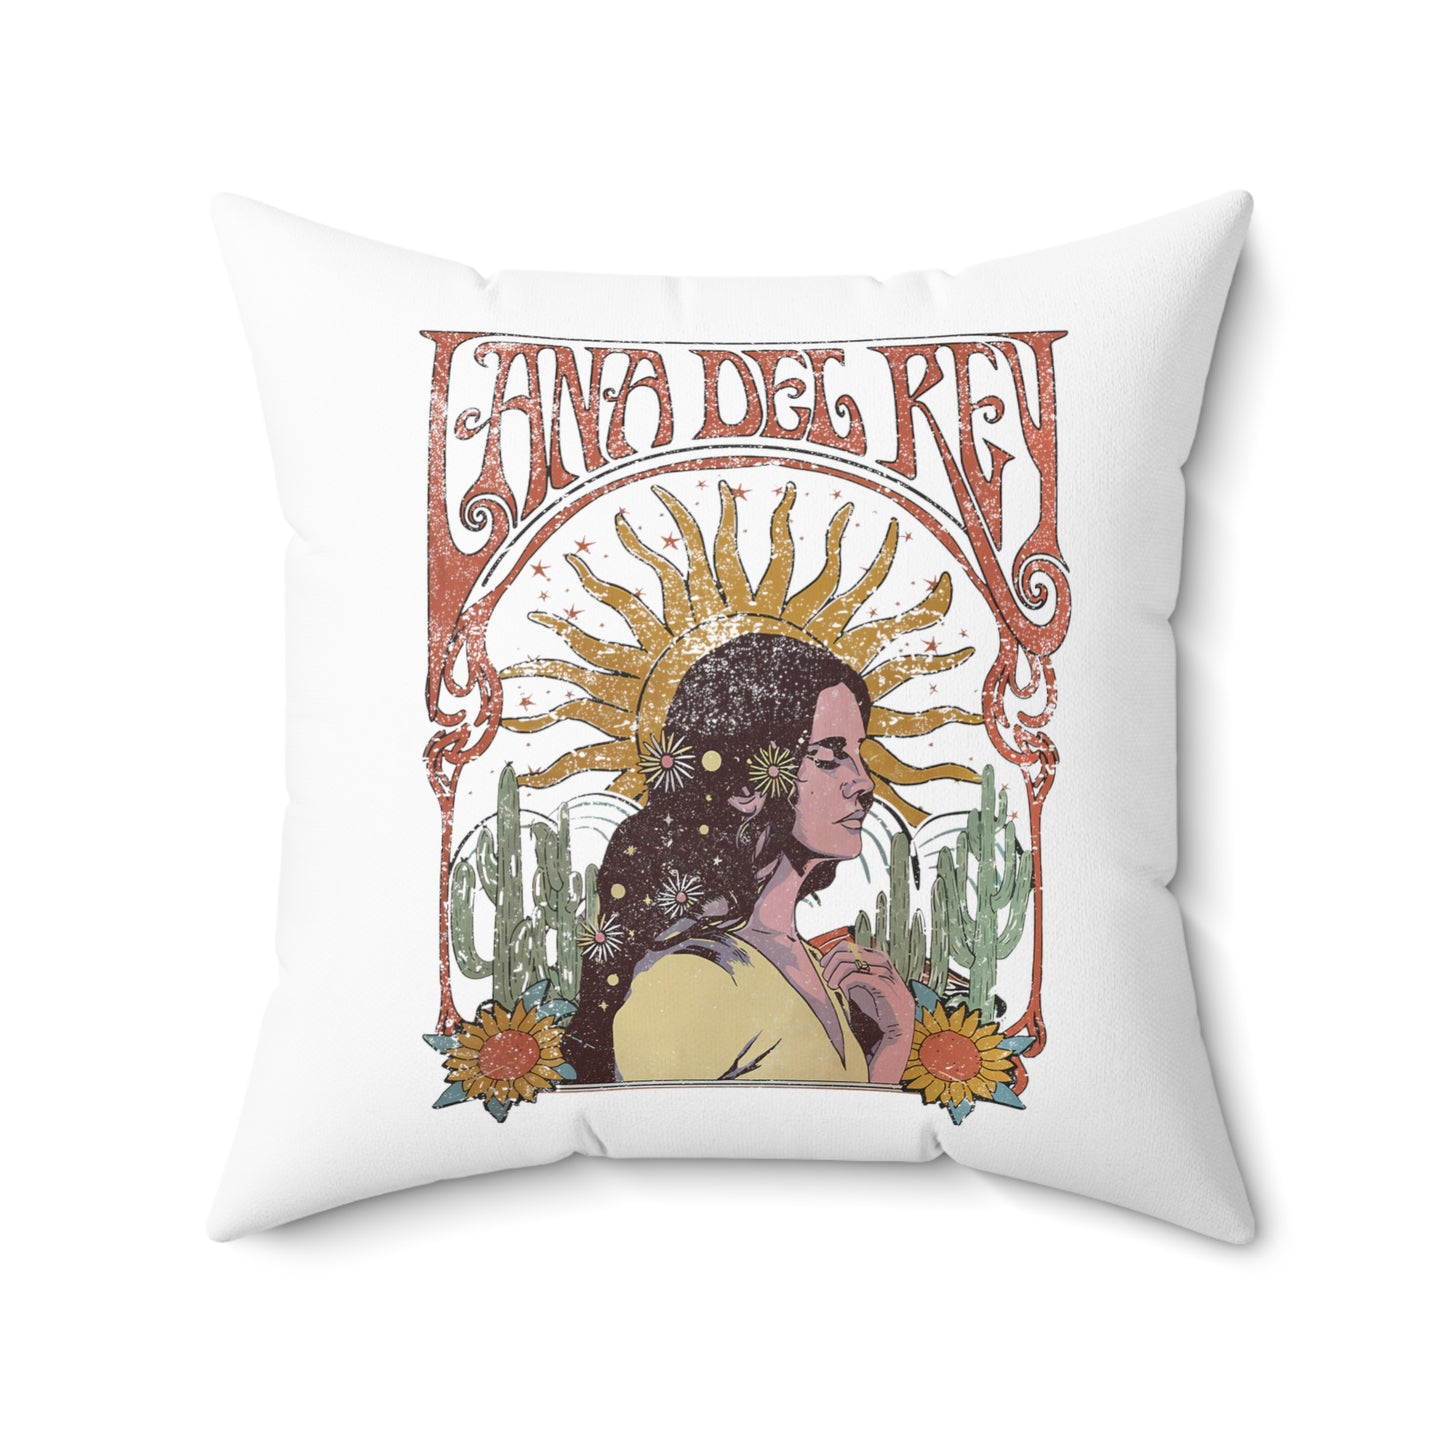 Lana Del Rey Vintage Artwork Spun Polyester Square Pillow